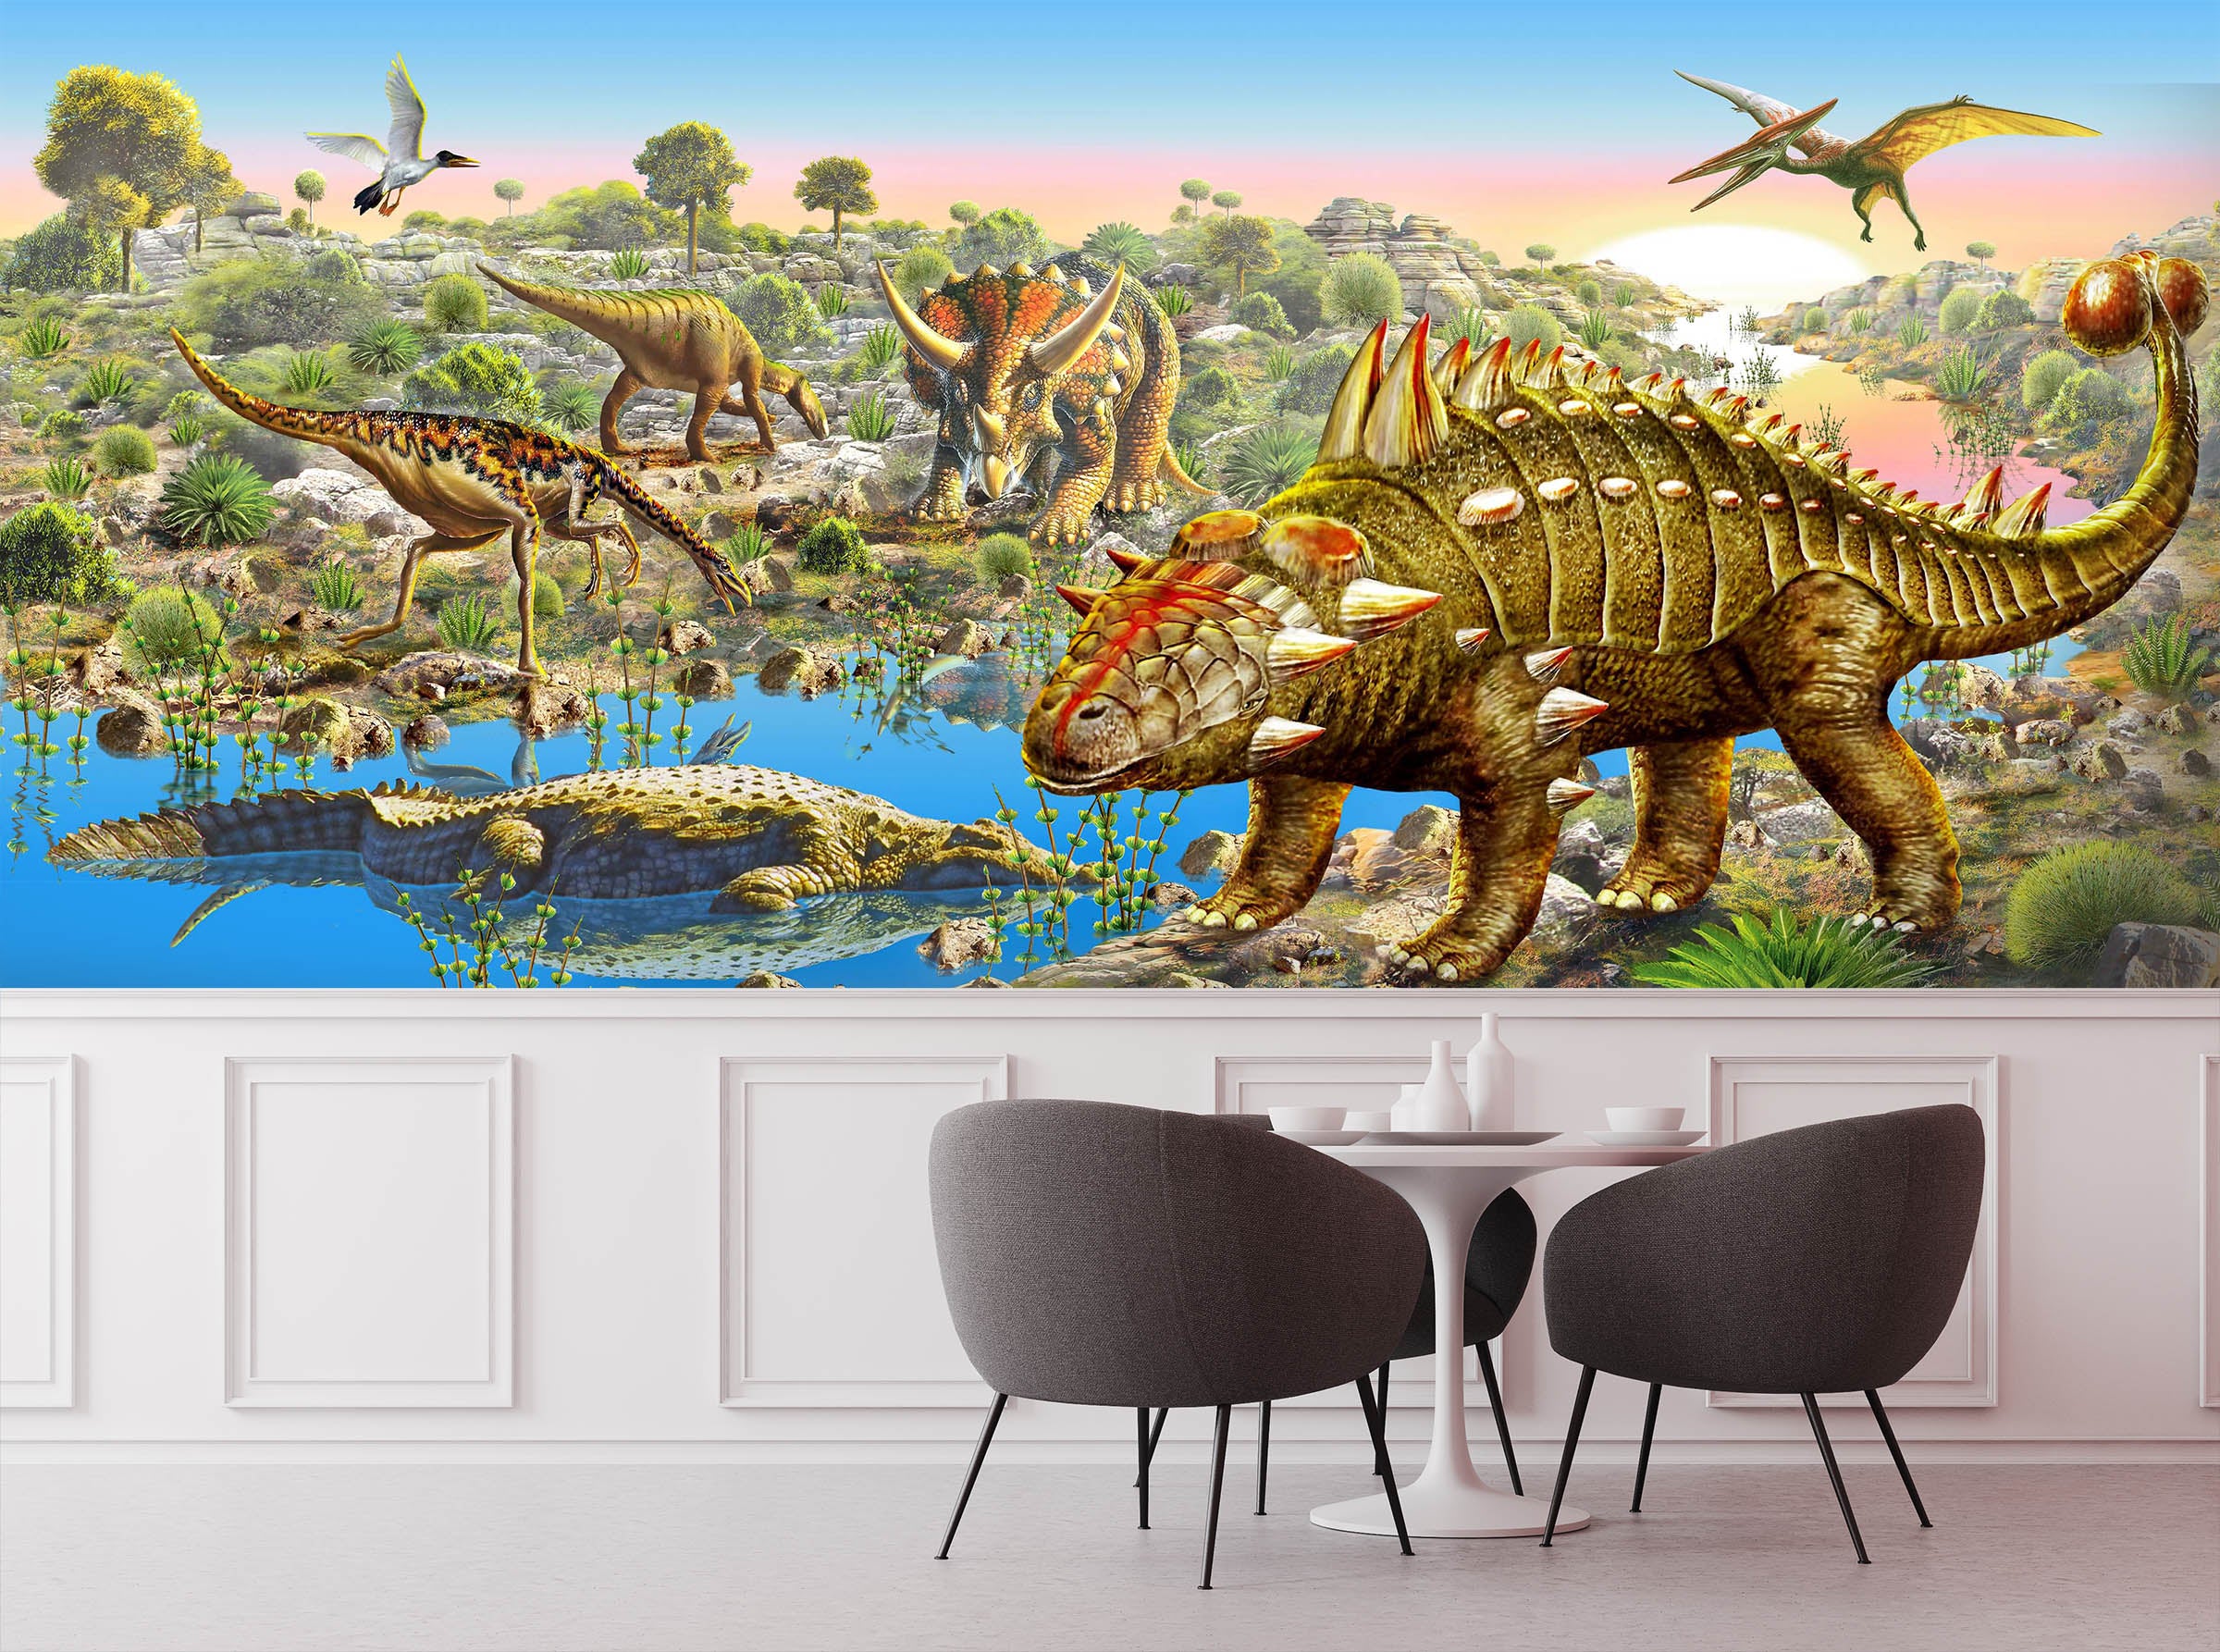 3D Dinosaur 1402 Adrian Chesterman Wall Mural Wall Murals